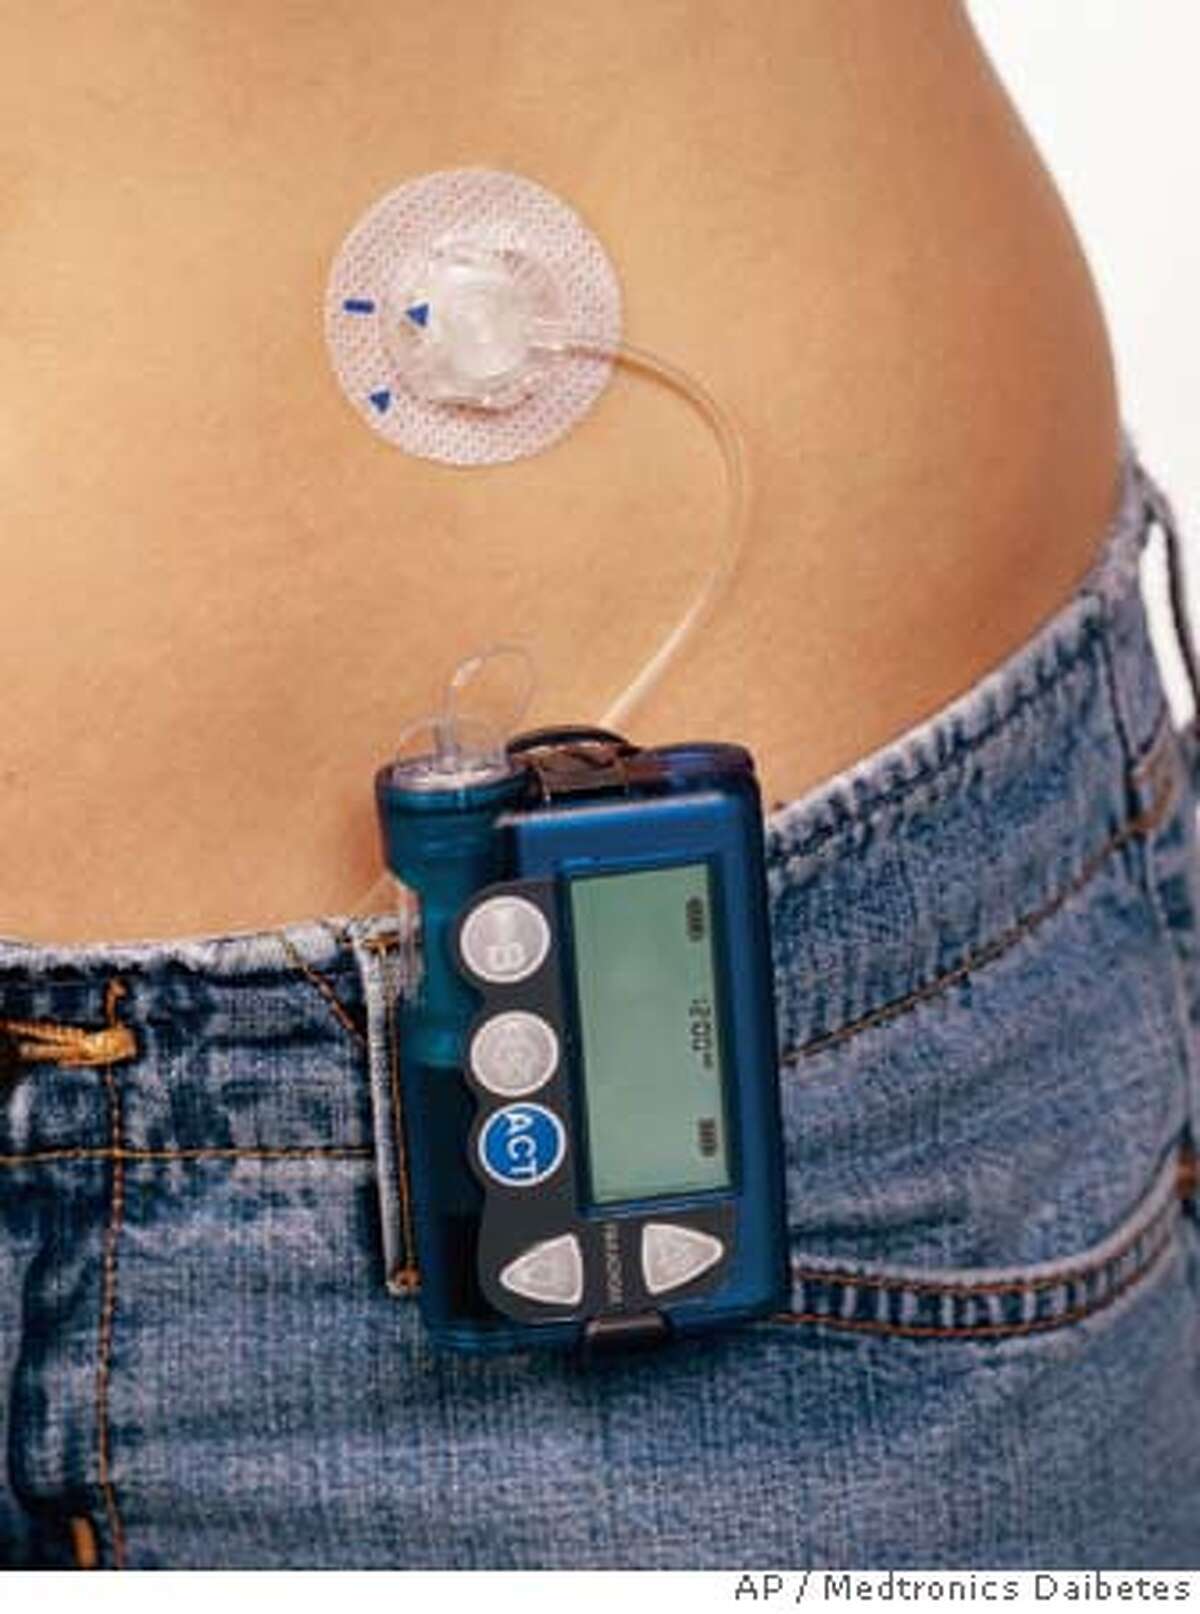 FDA warns that teens using insulin pumps may be too careless